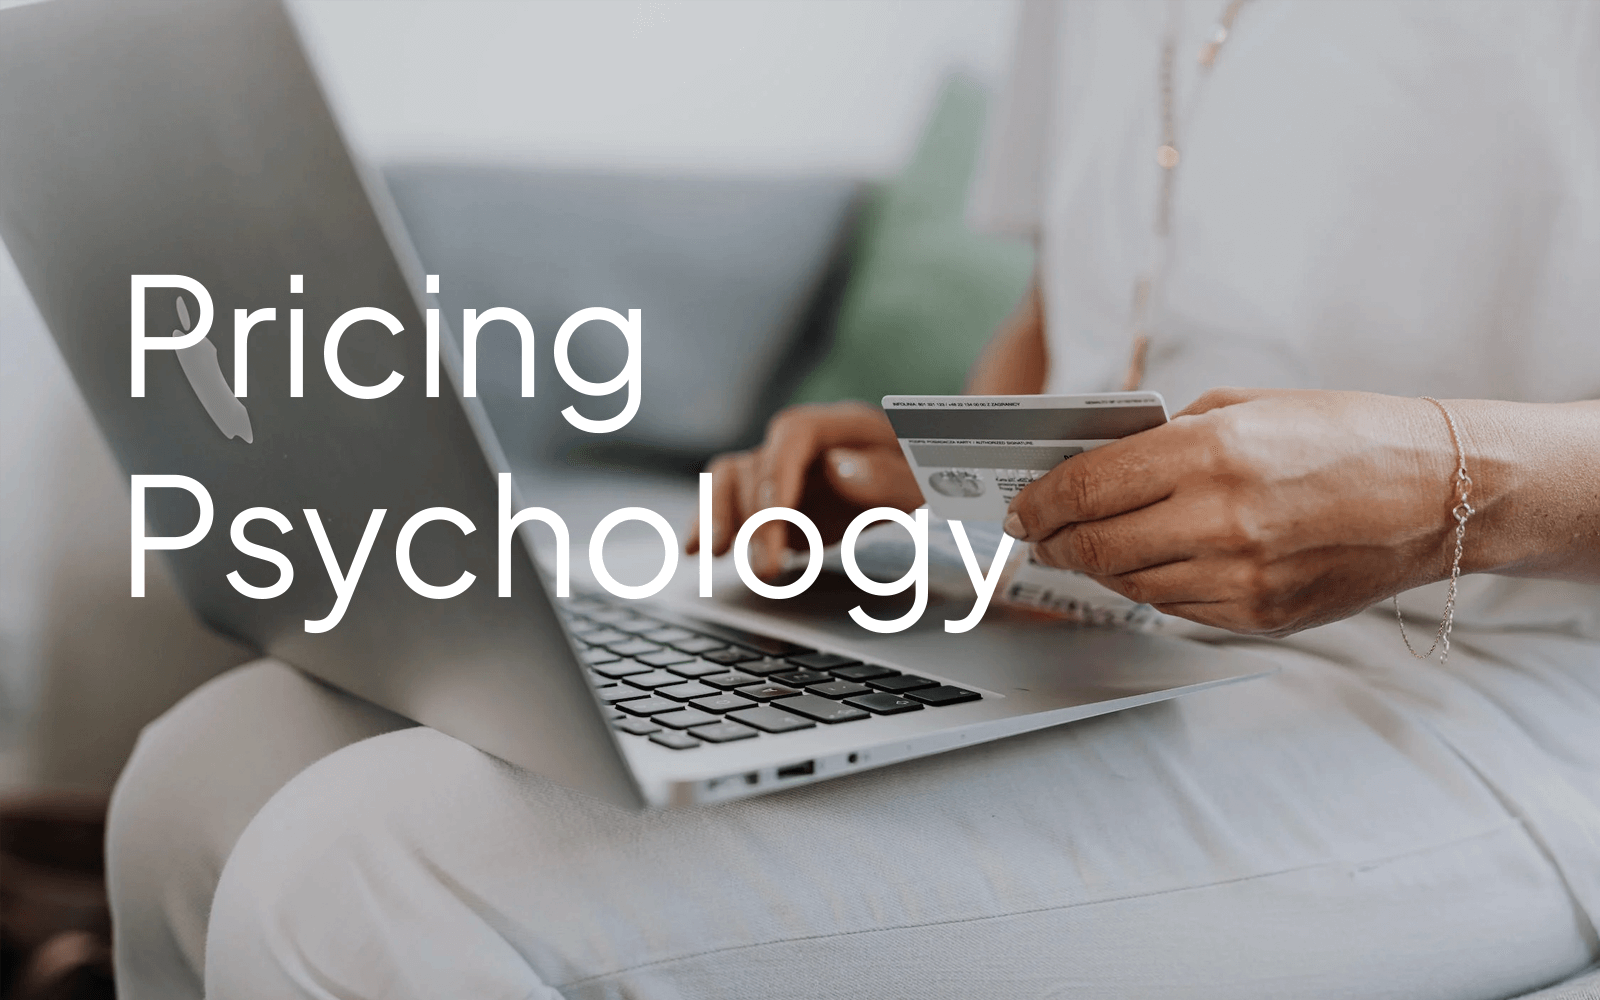 Pricing Psychology: A List of Tactics